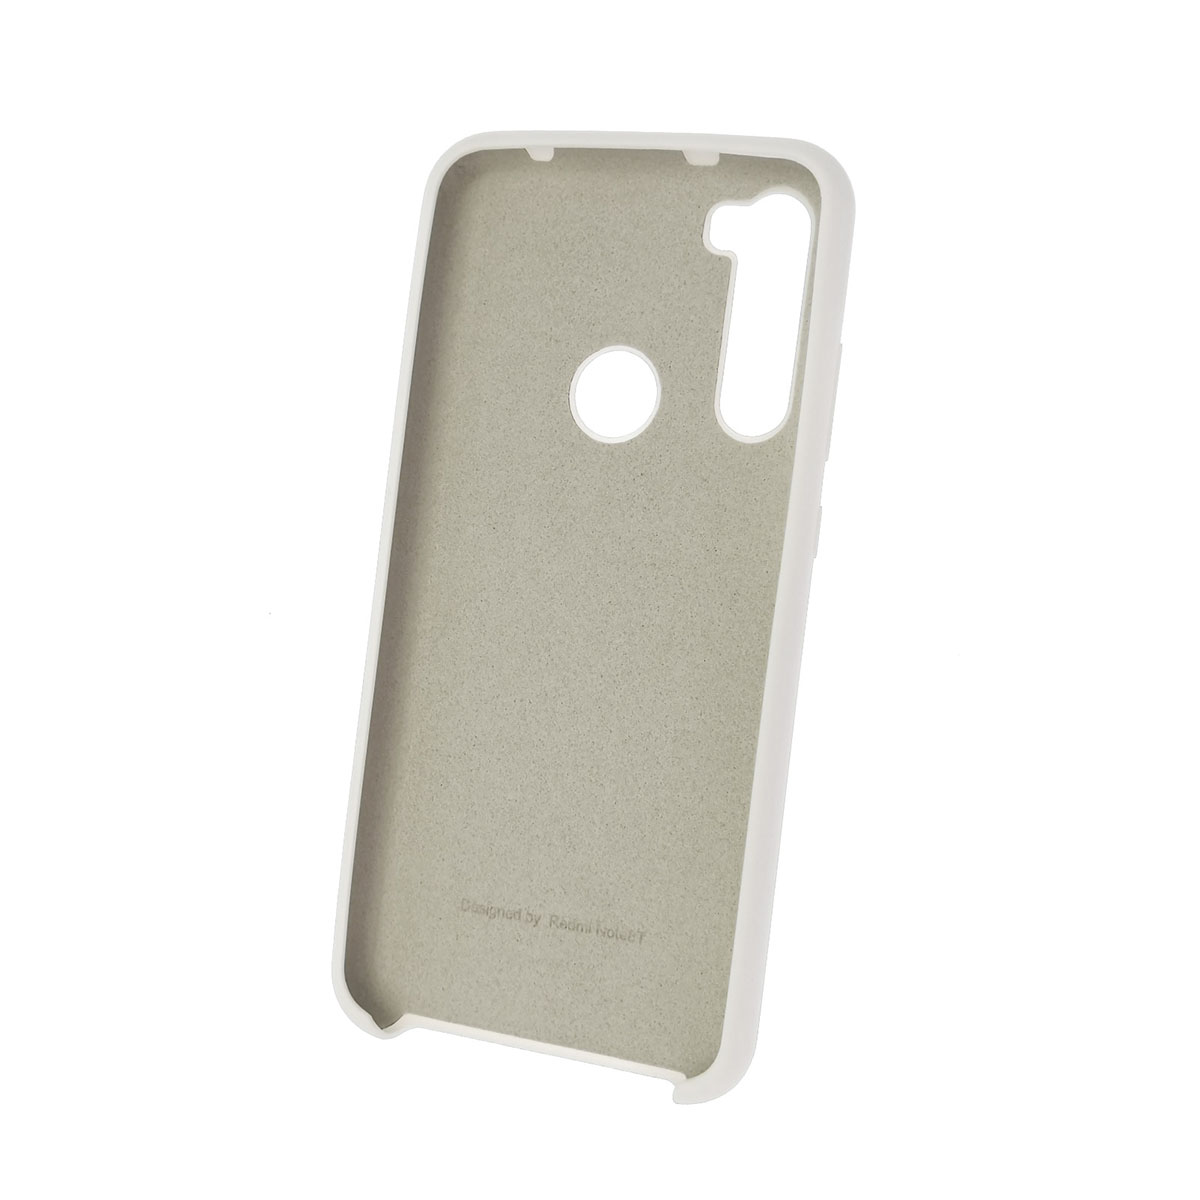 Чехол накладка Silicon Cover для XIAOMI Redmi Note 8T, силикон, бархат, цвет белый.